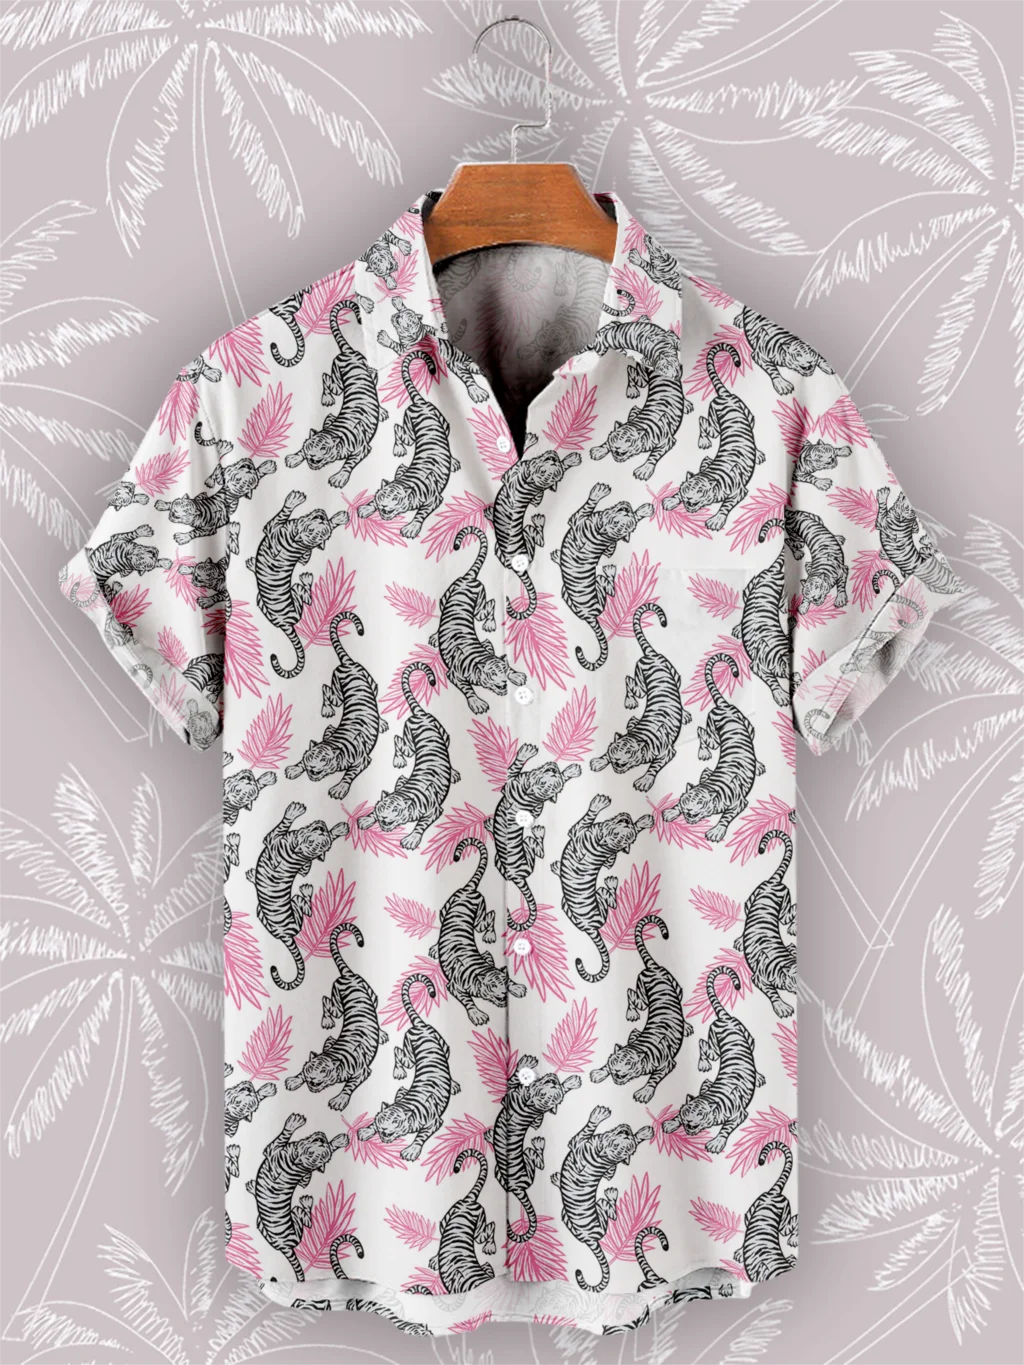 

Summer White Shirts Novelties Trend To Sell Tiger Print Hawaiian Short Sleeve Fashion Shirts for Men Casual Beach Oversized